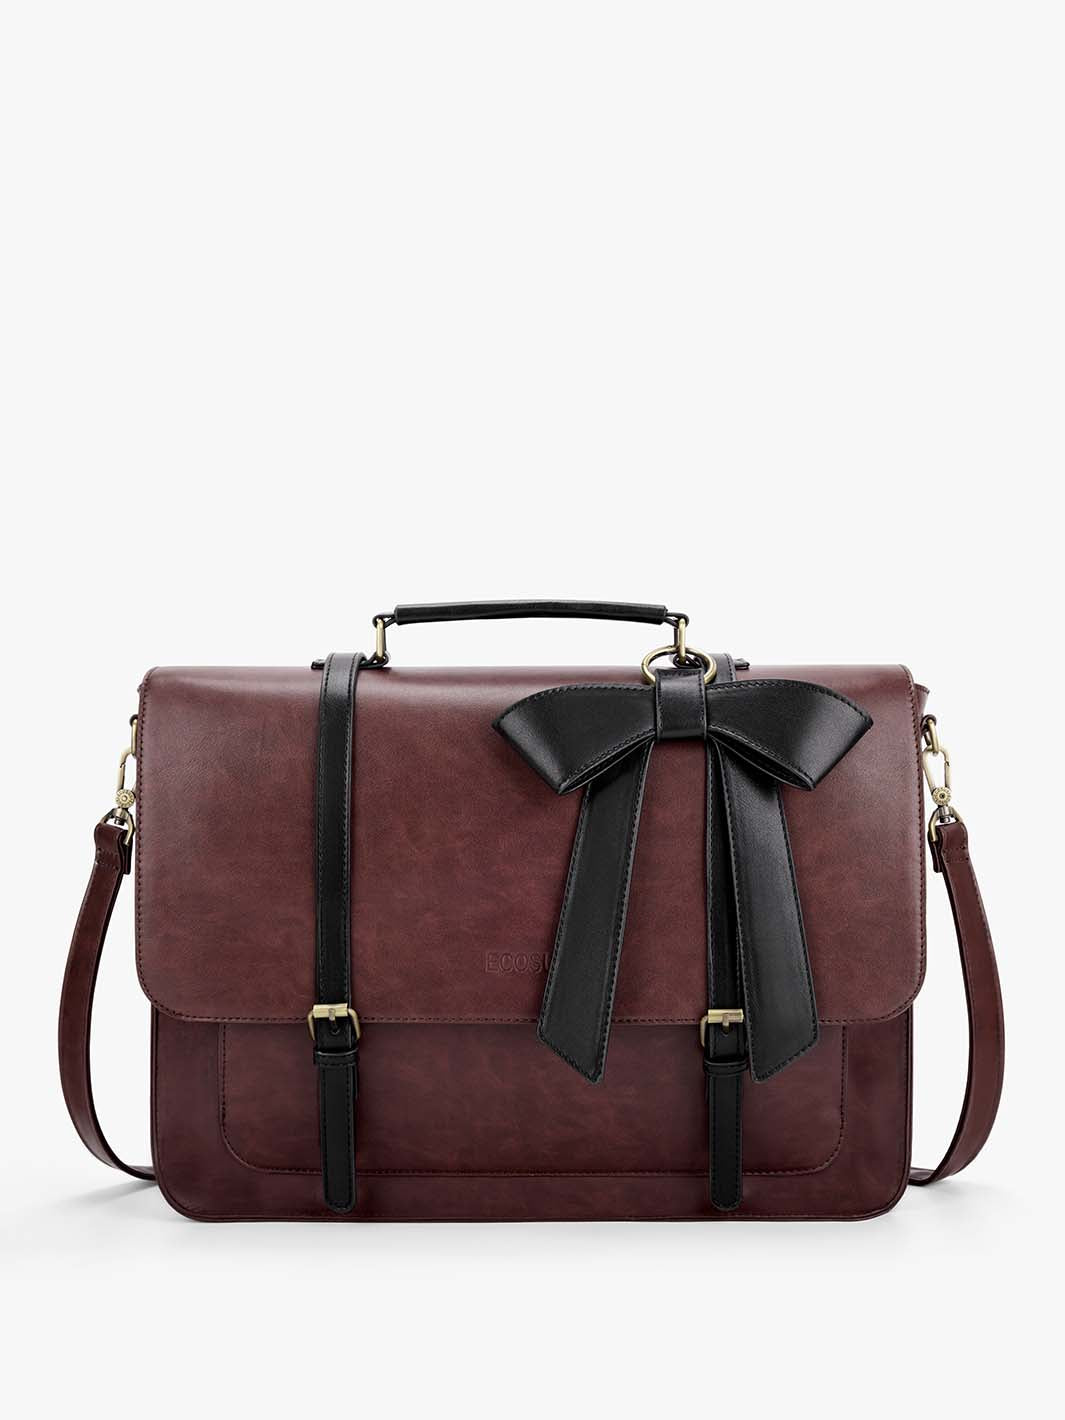 ECOSUSI Small Crossbody Bags Vintage Satchel Work Bag Vegan Leather  Shoulder Bag with Detachable Bow